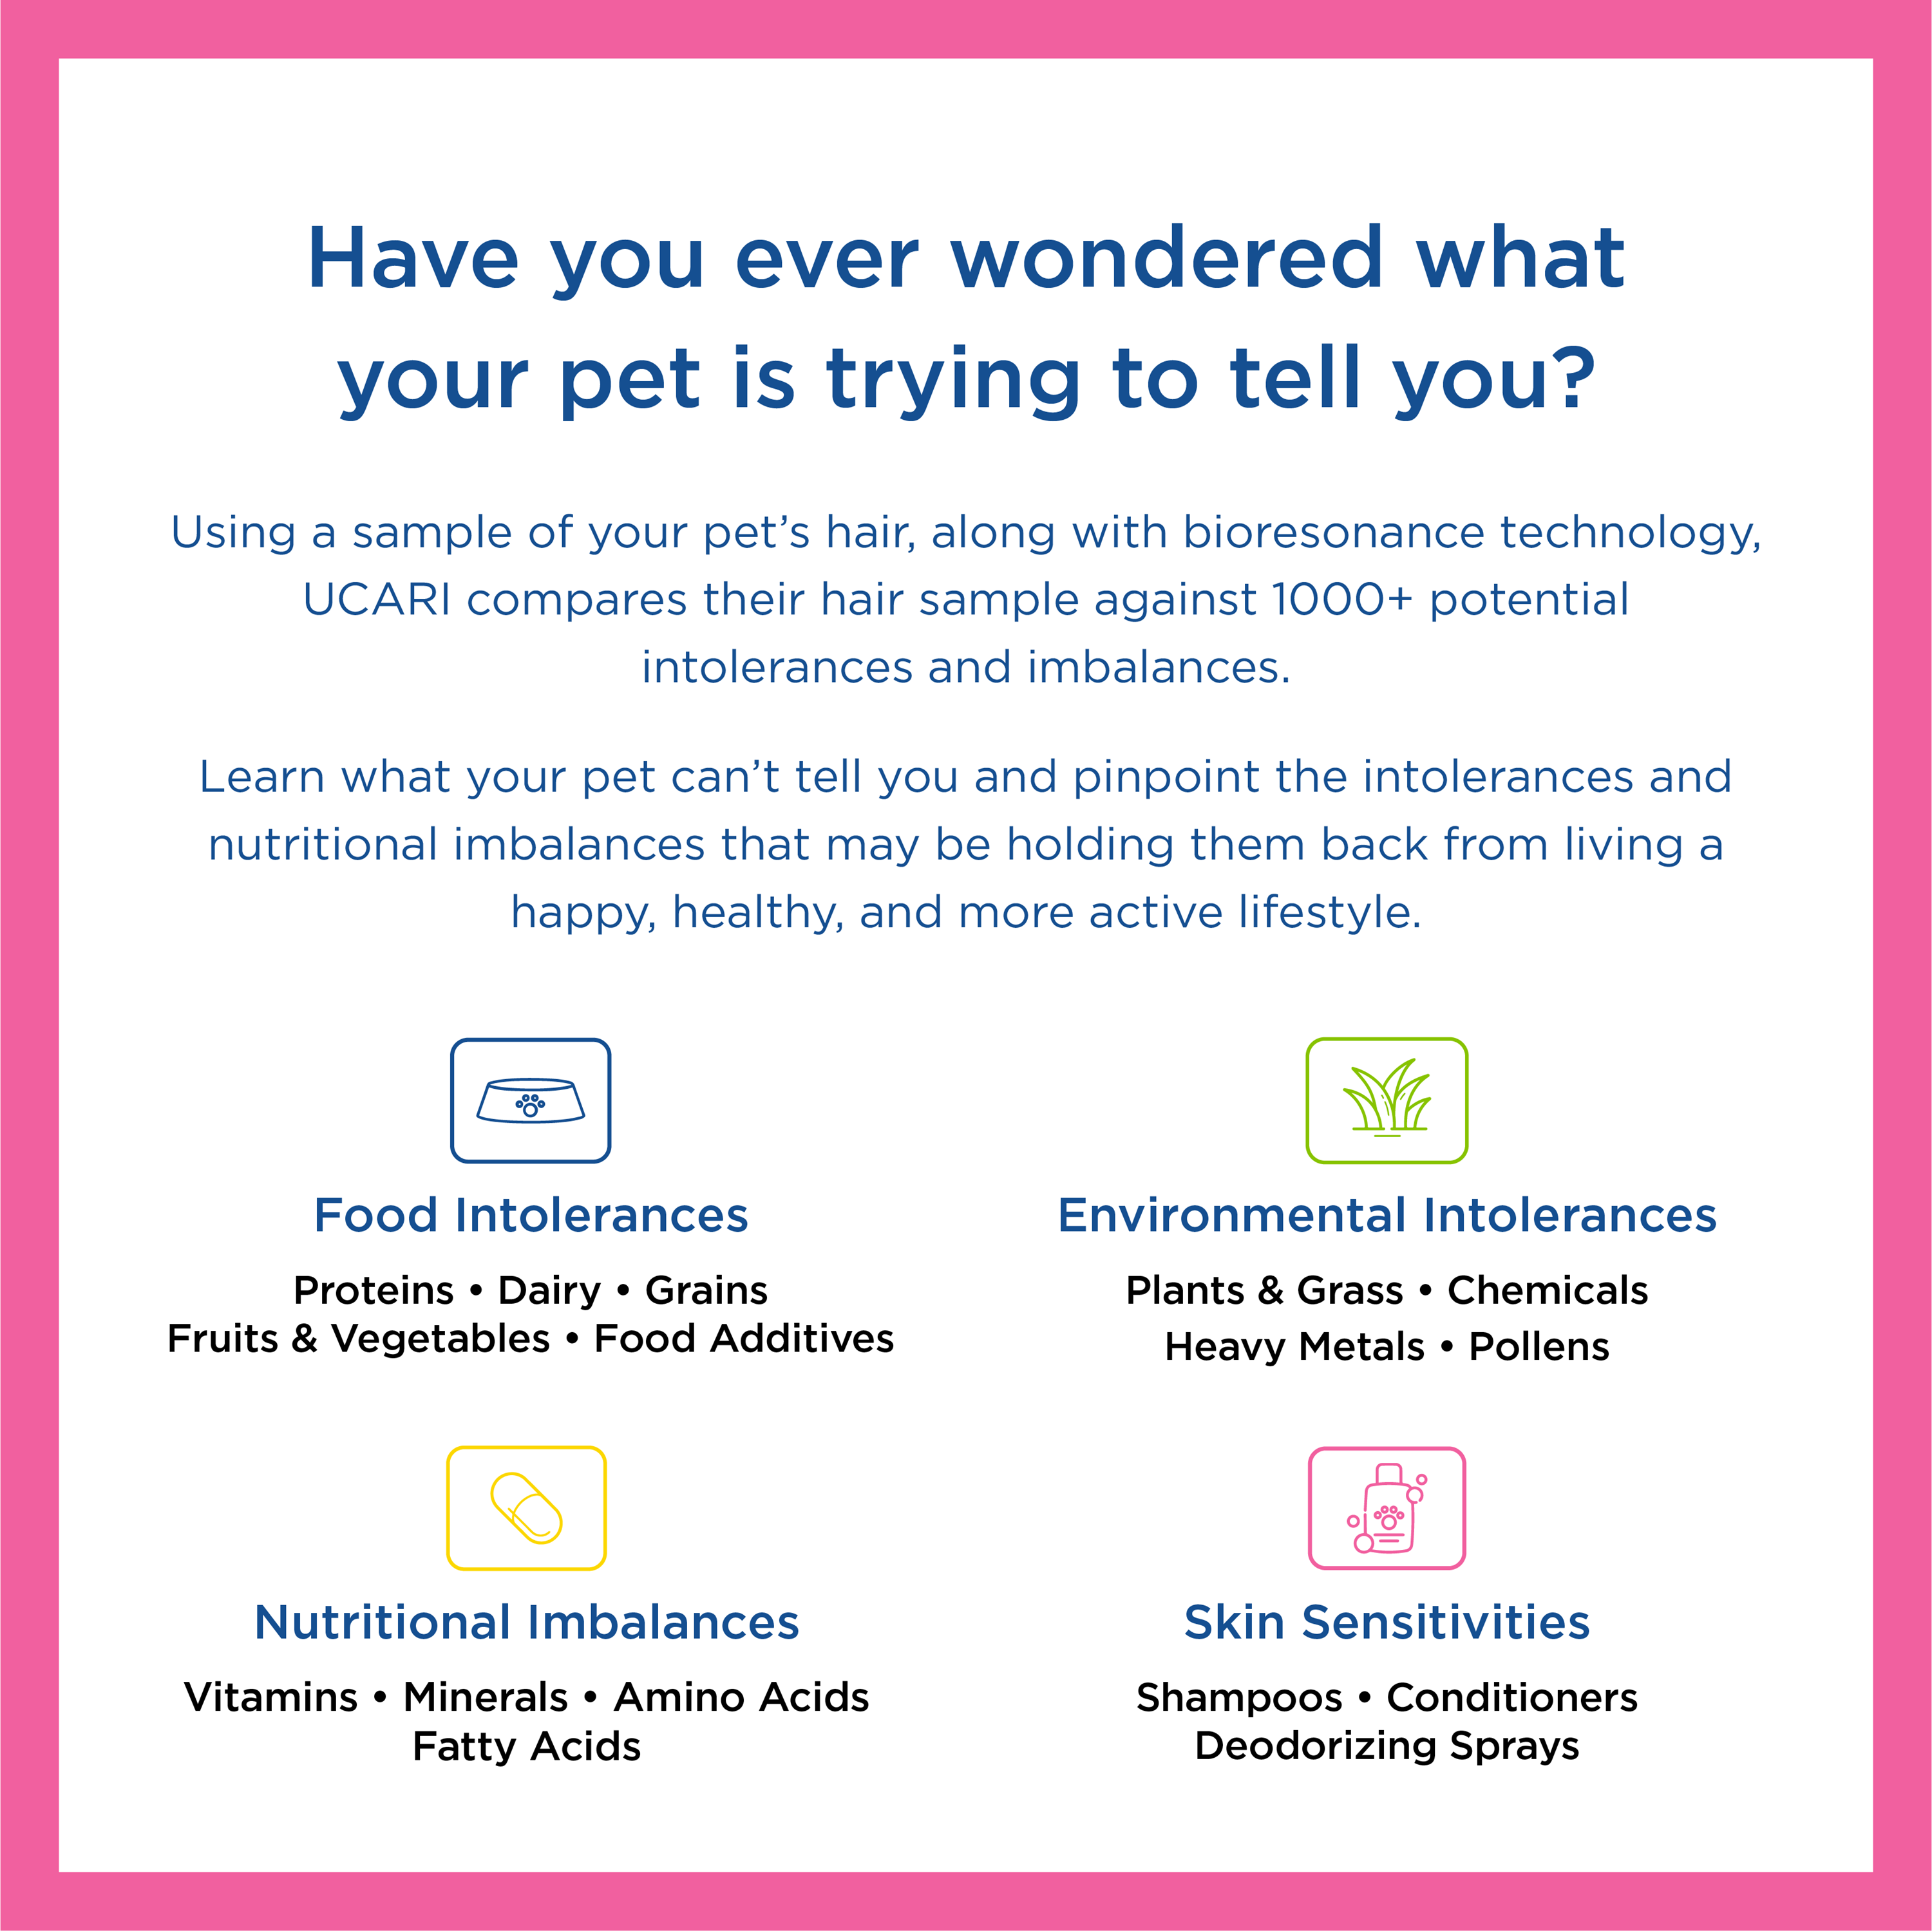 UCARI Pet Intolerance Test Kit tests for food and environmental sensitivities, as well as nutritional imbalances and skin sensitivities.